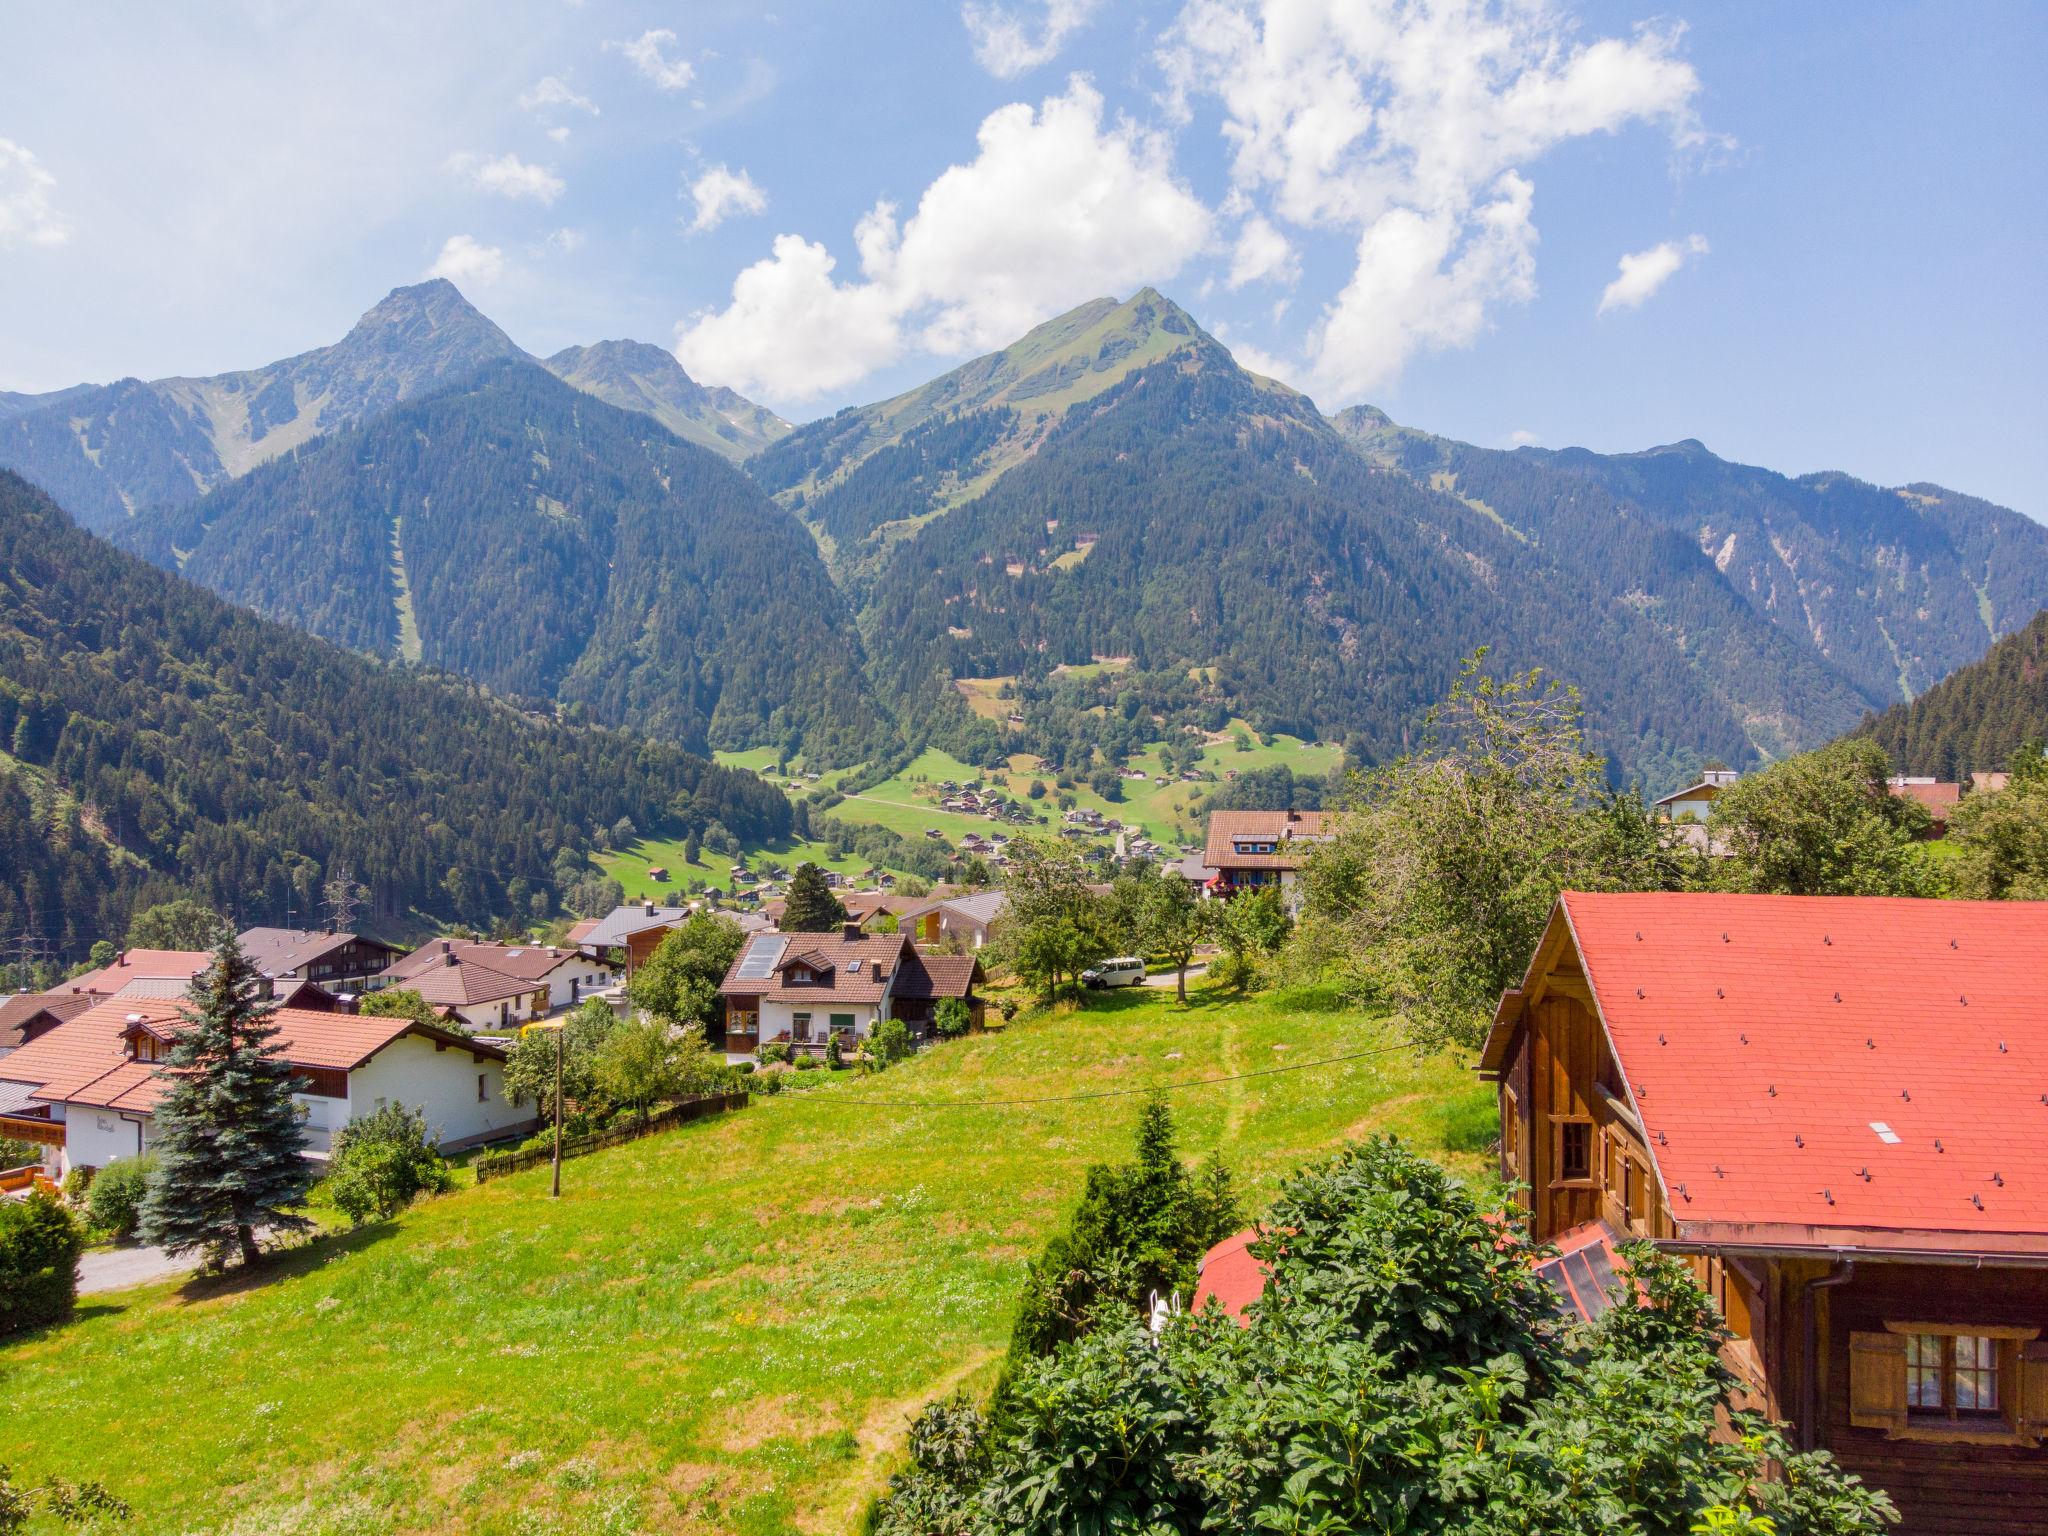 Foto 2 - Appartamento a Sankt Gallenkirch con giardino e vista sulle montagne